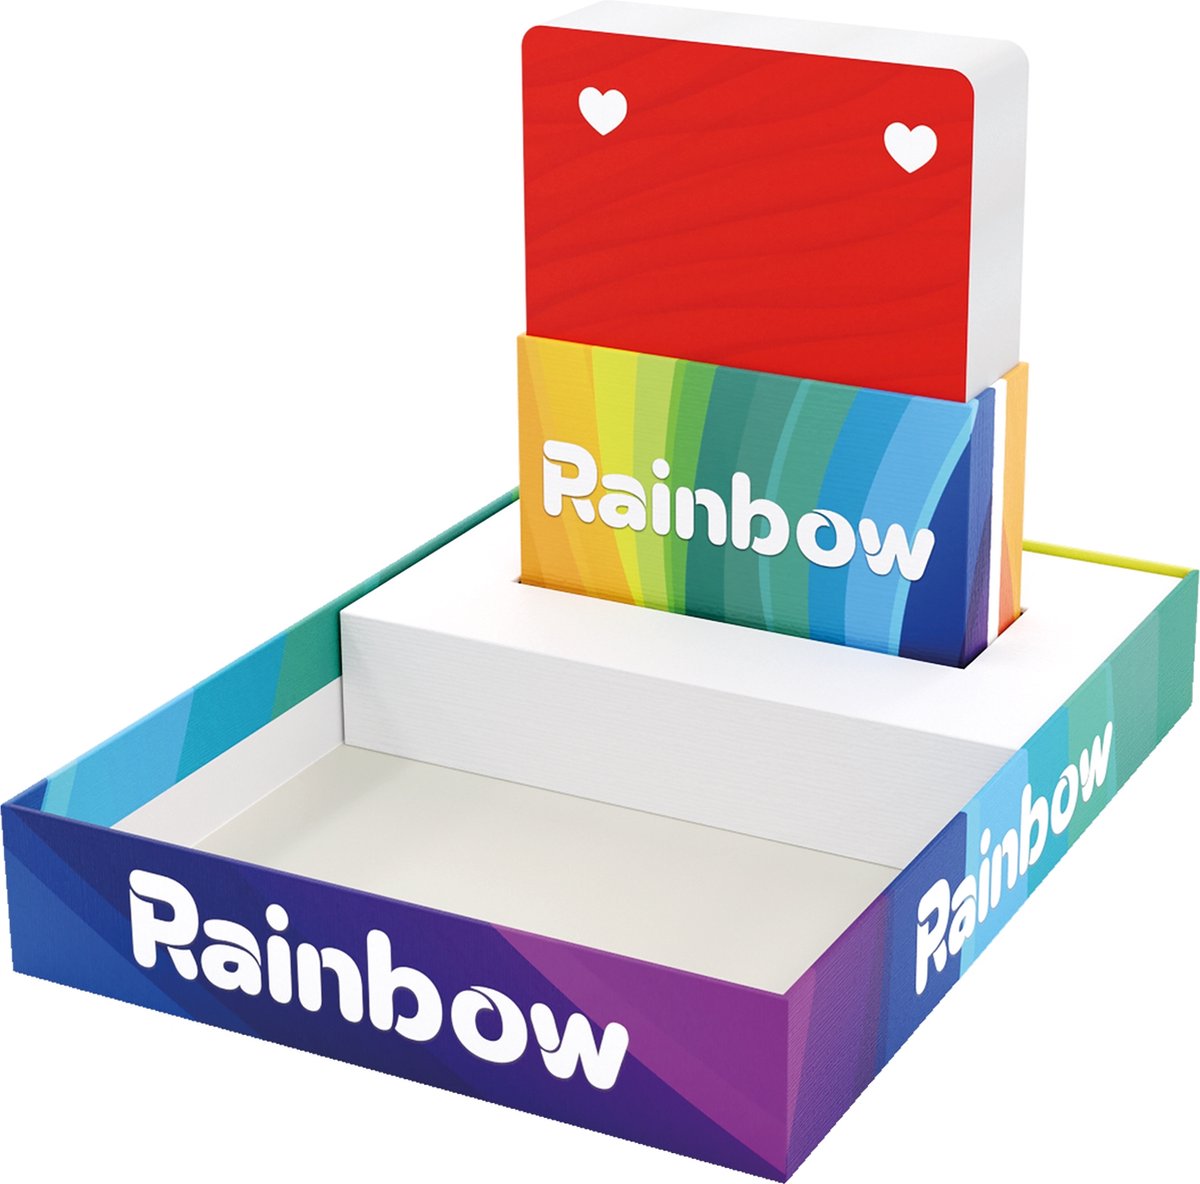 Rainbow Memory Game English/Dutch